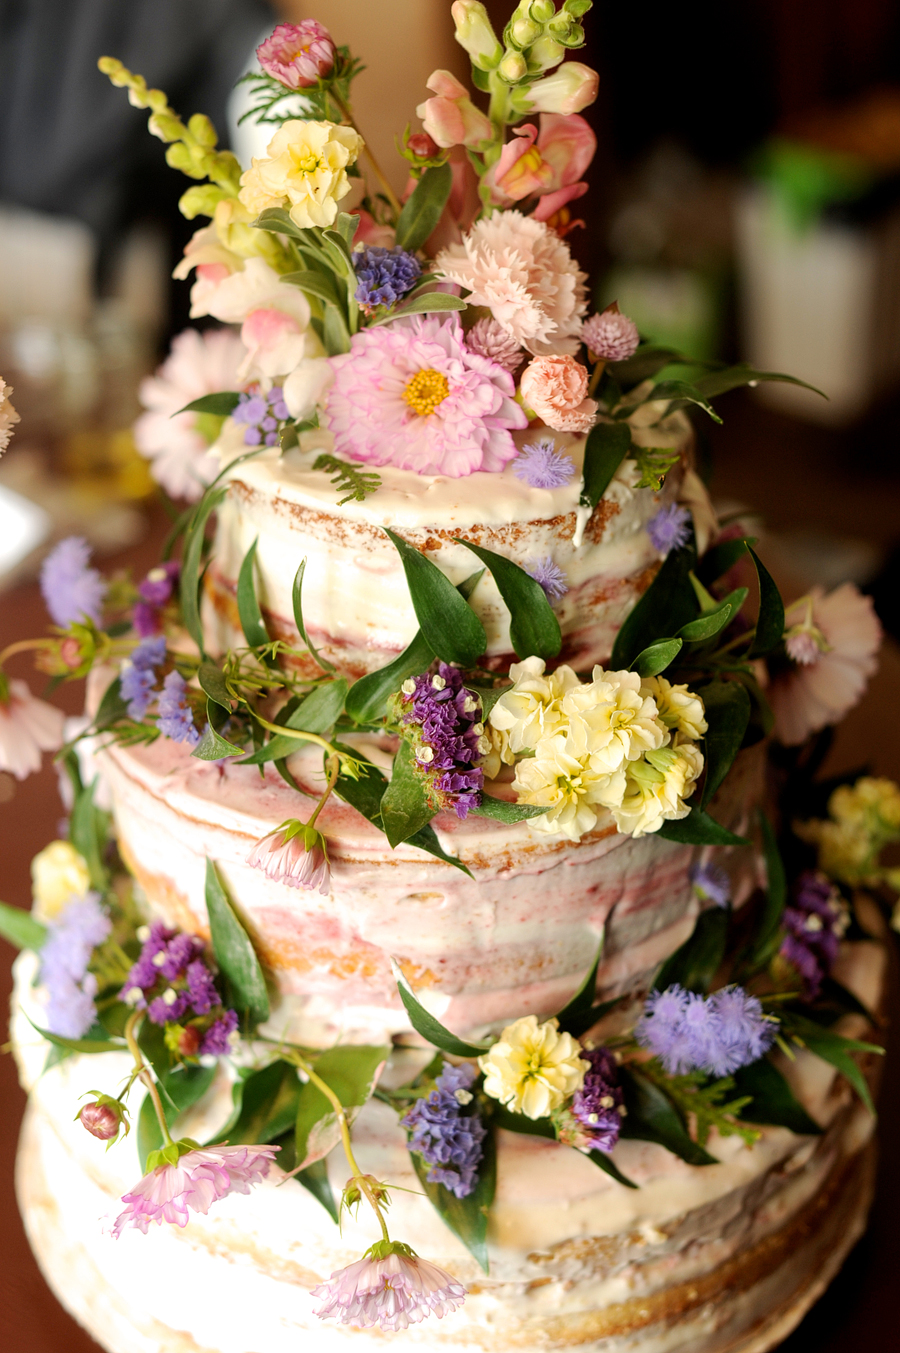 homemade wedding cake